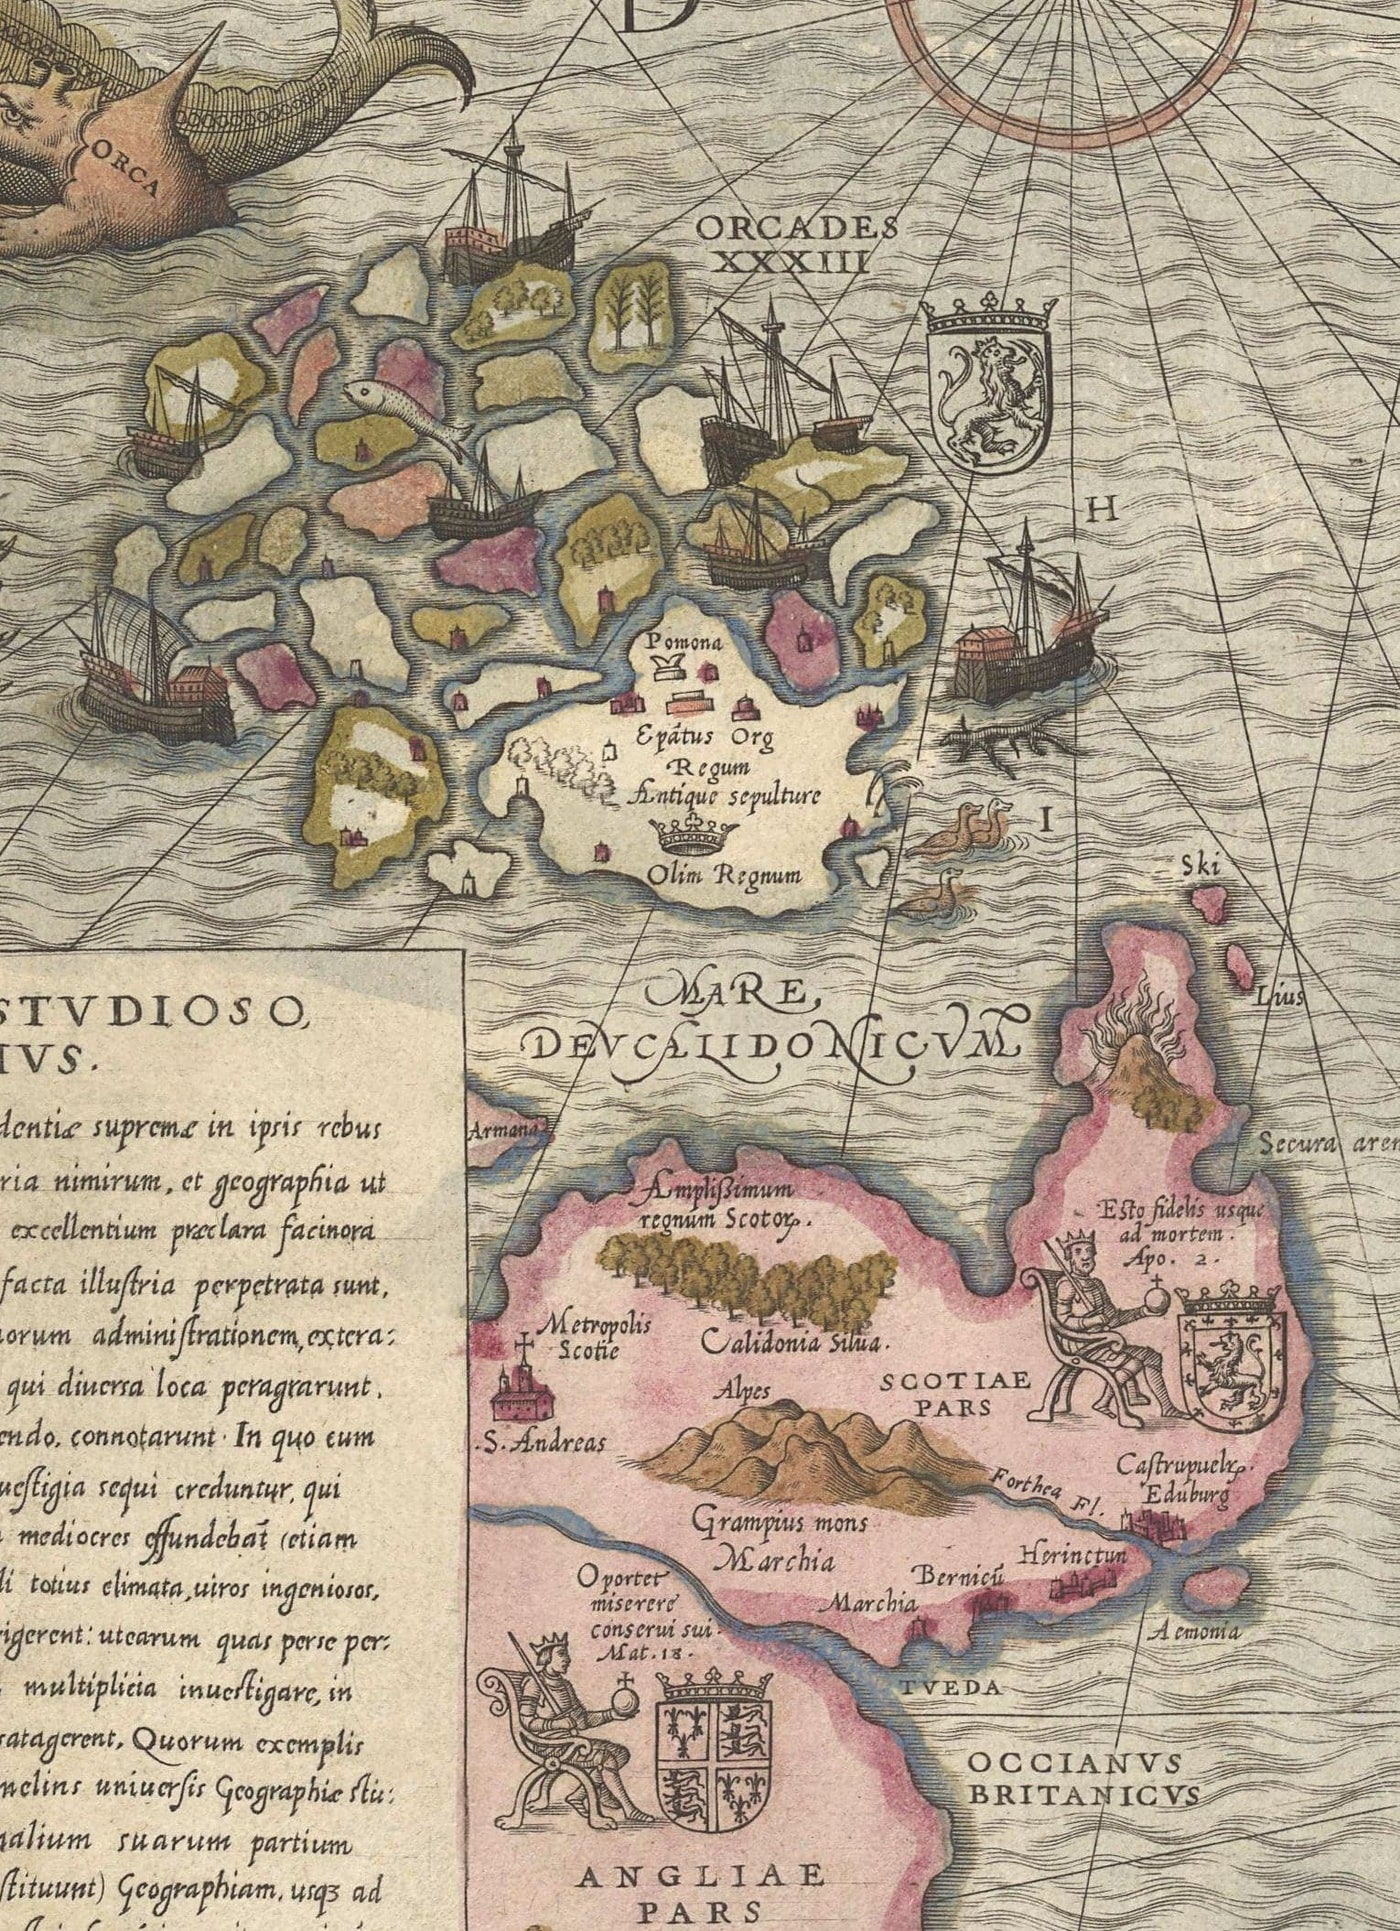 Viejo mapa de Scandinavia, 1539 - Carta Marina por Olaus Magnus - Mapa del monstruo marino - Países nórdicos Dinamarca, Suecia, Finlandia